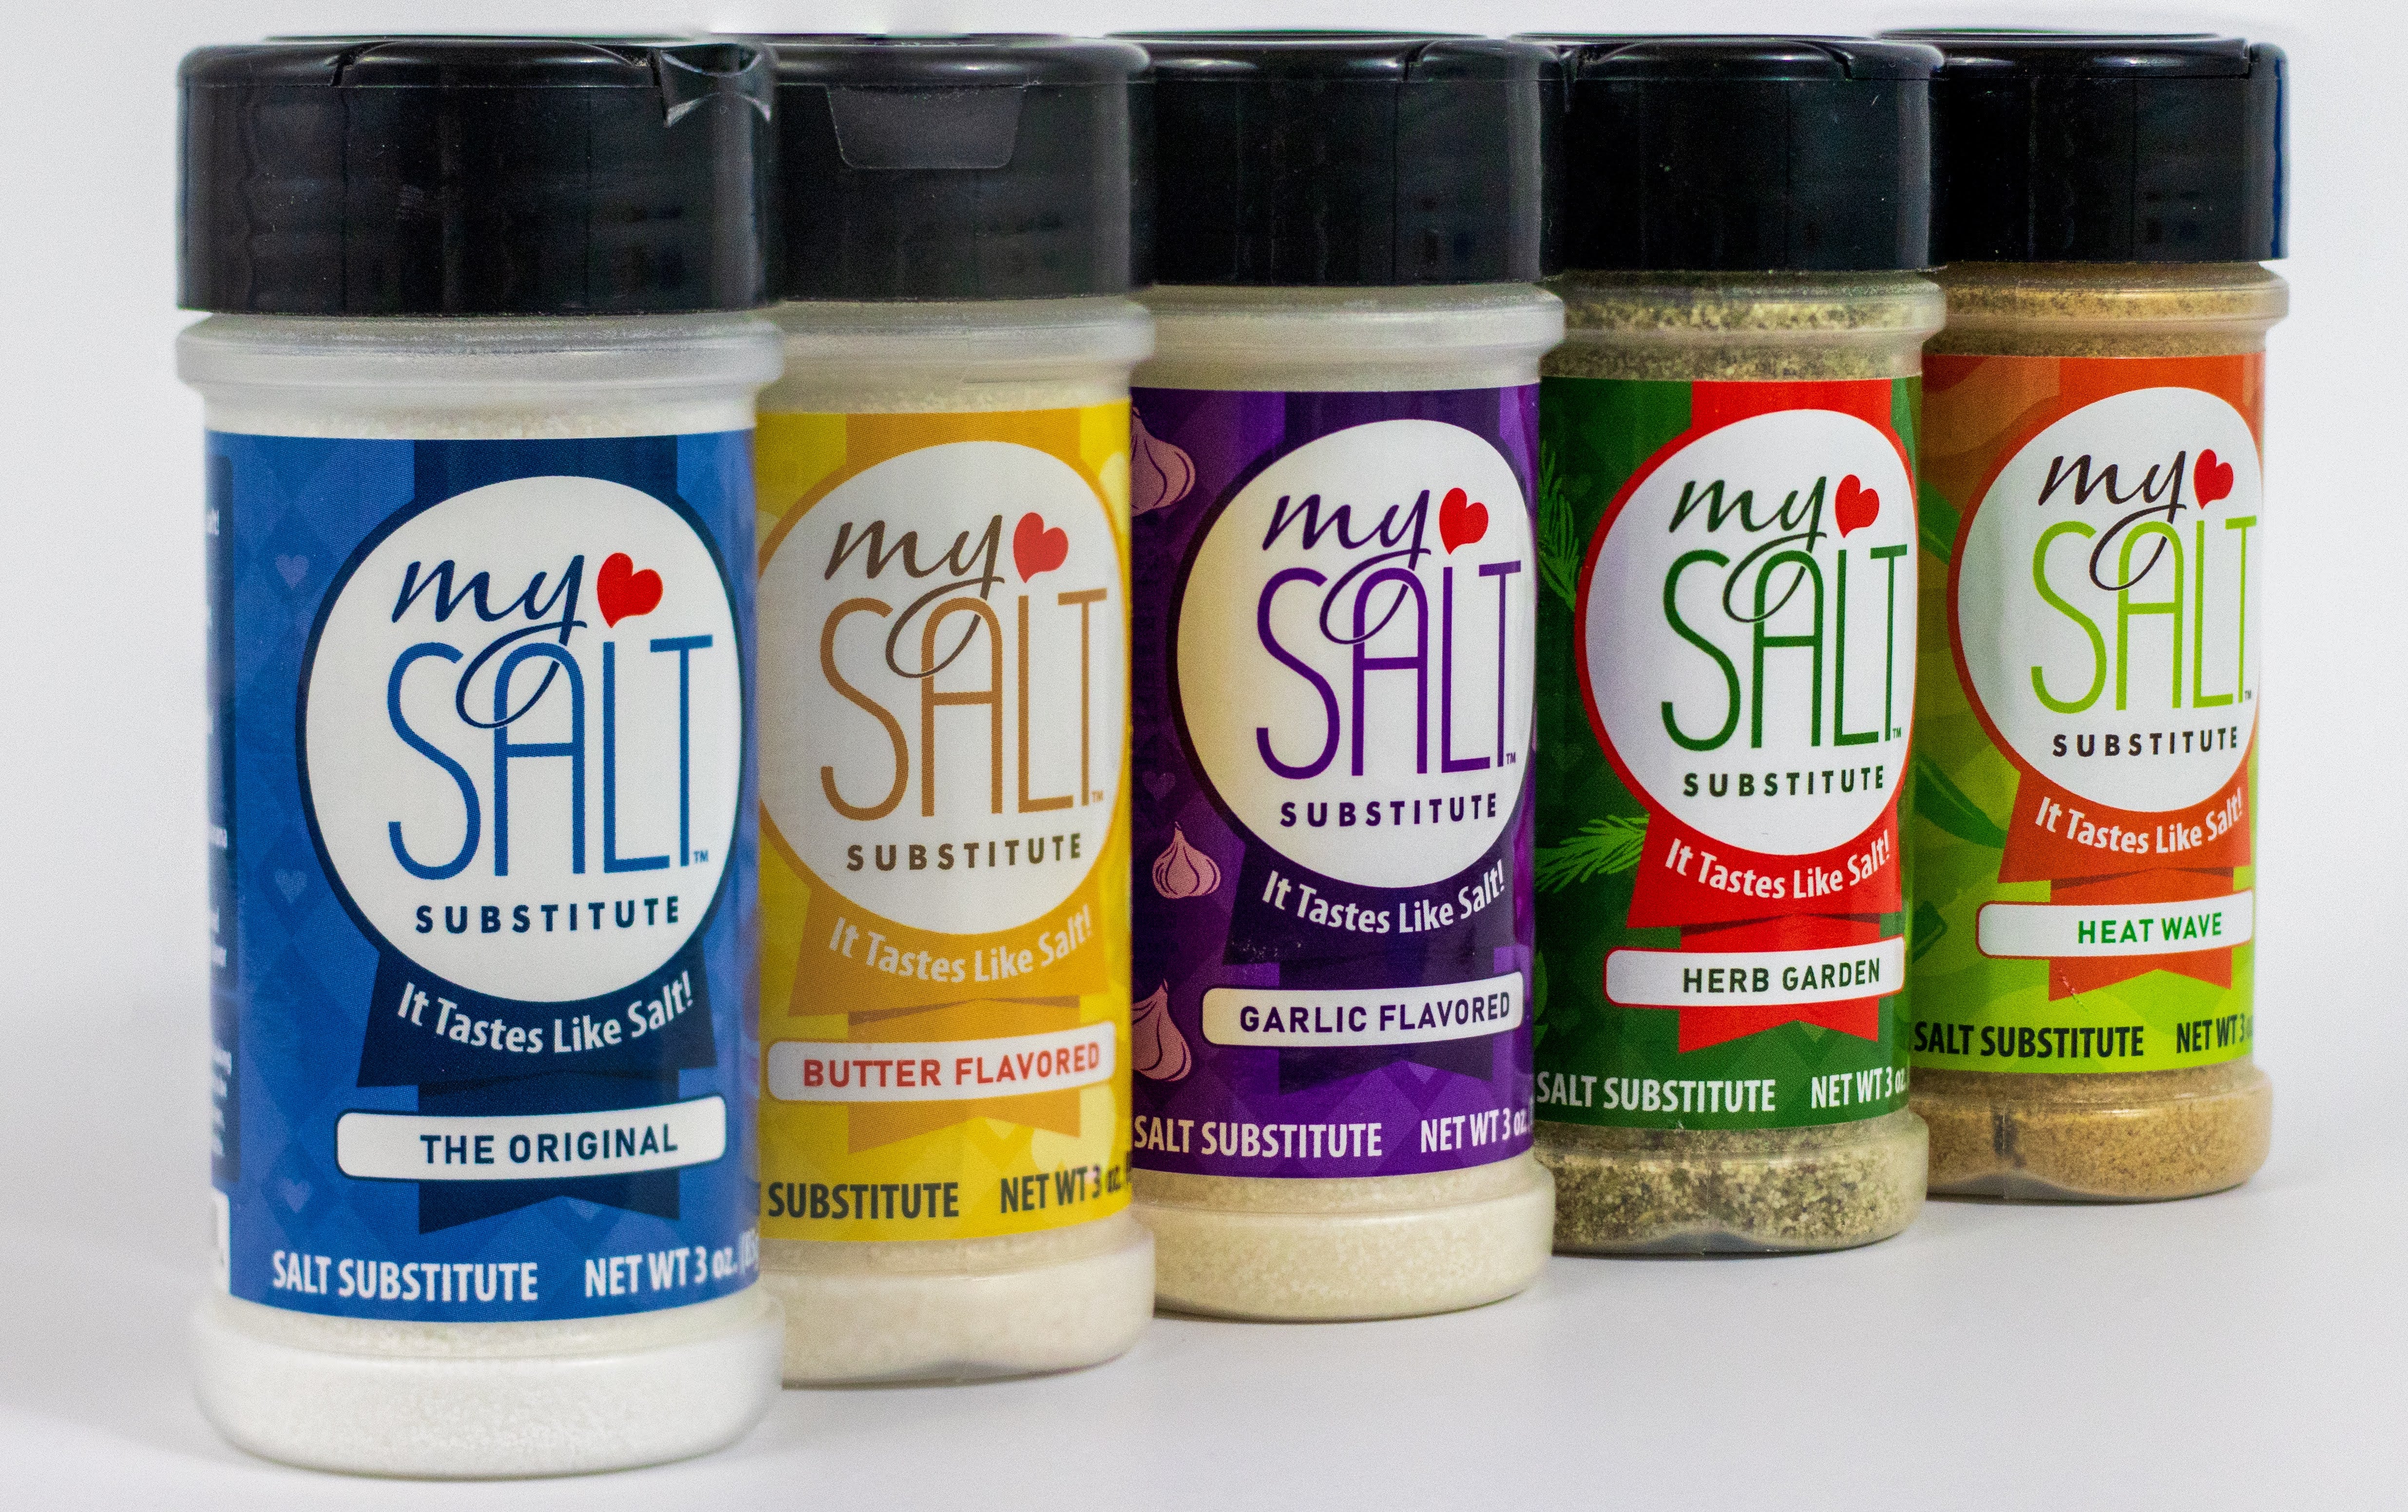 MySALT Herb Garden Salt Substitute – My Salt Substitute